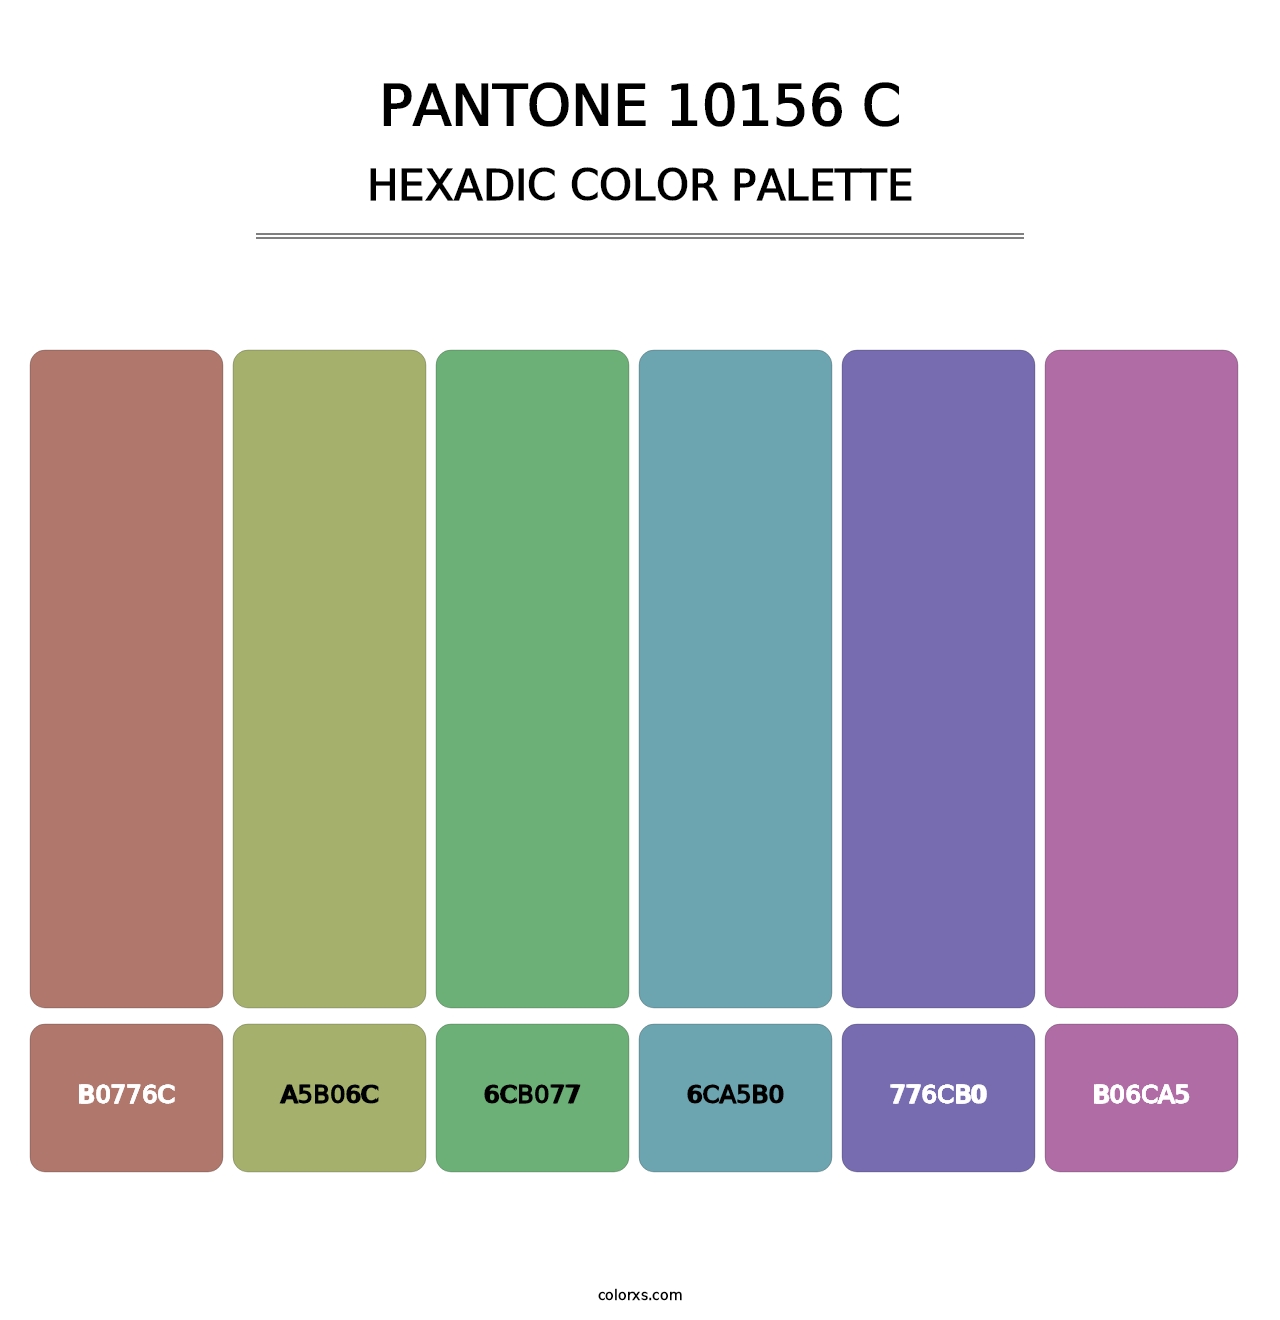 PANTONE 10156 C - Hexadic Color Palette